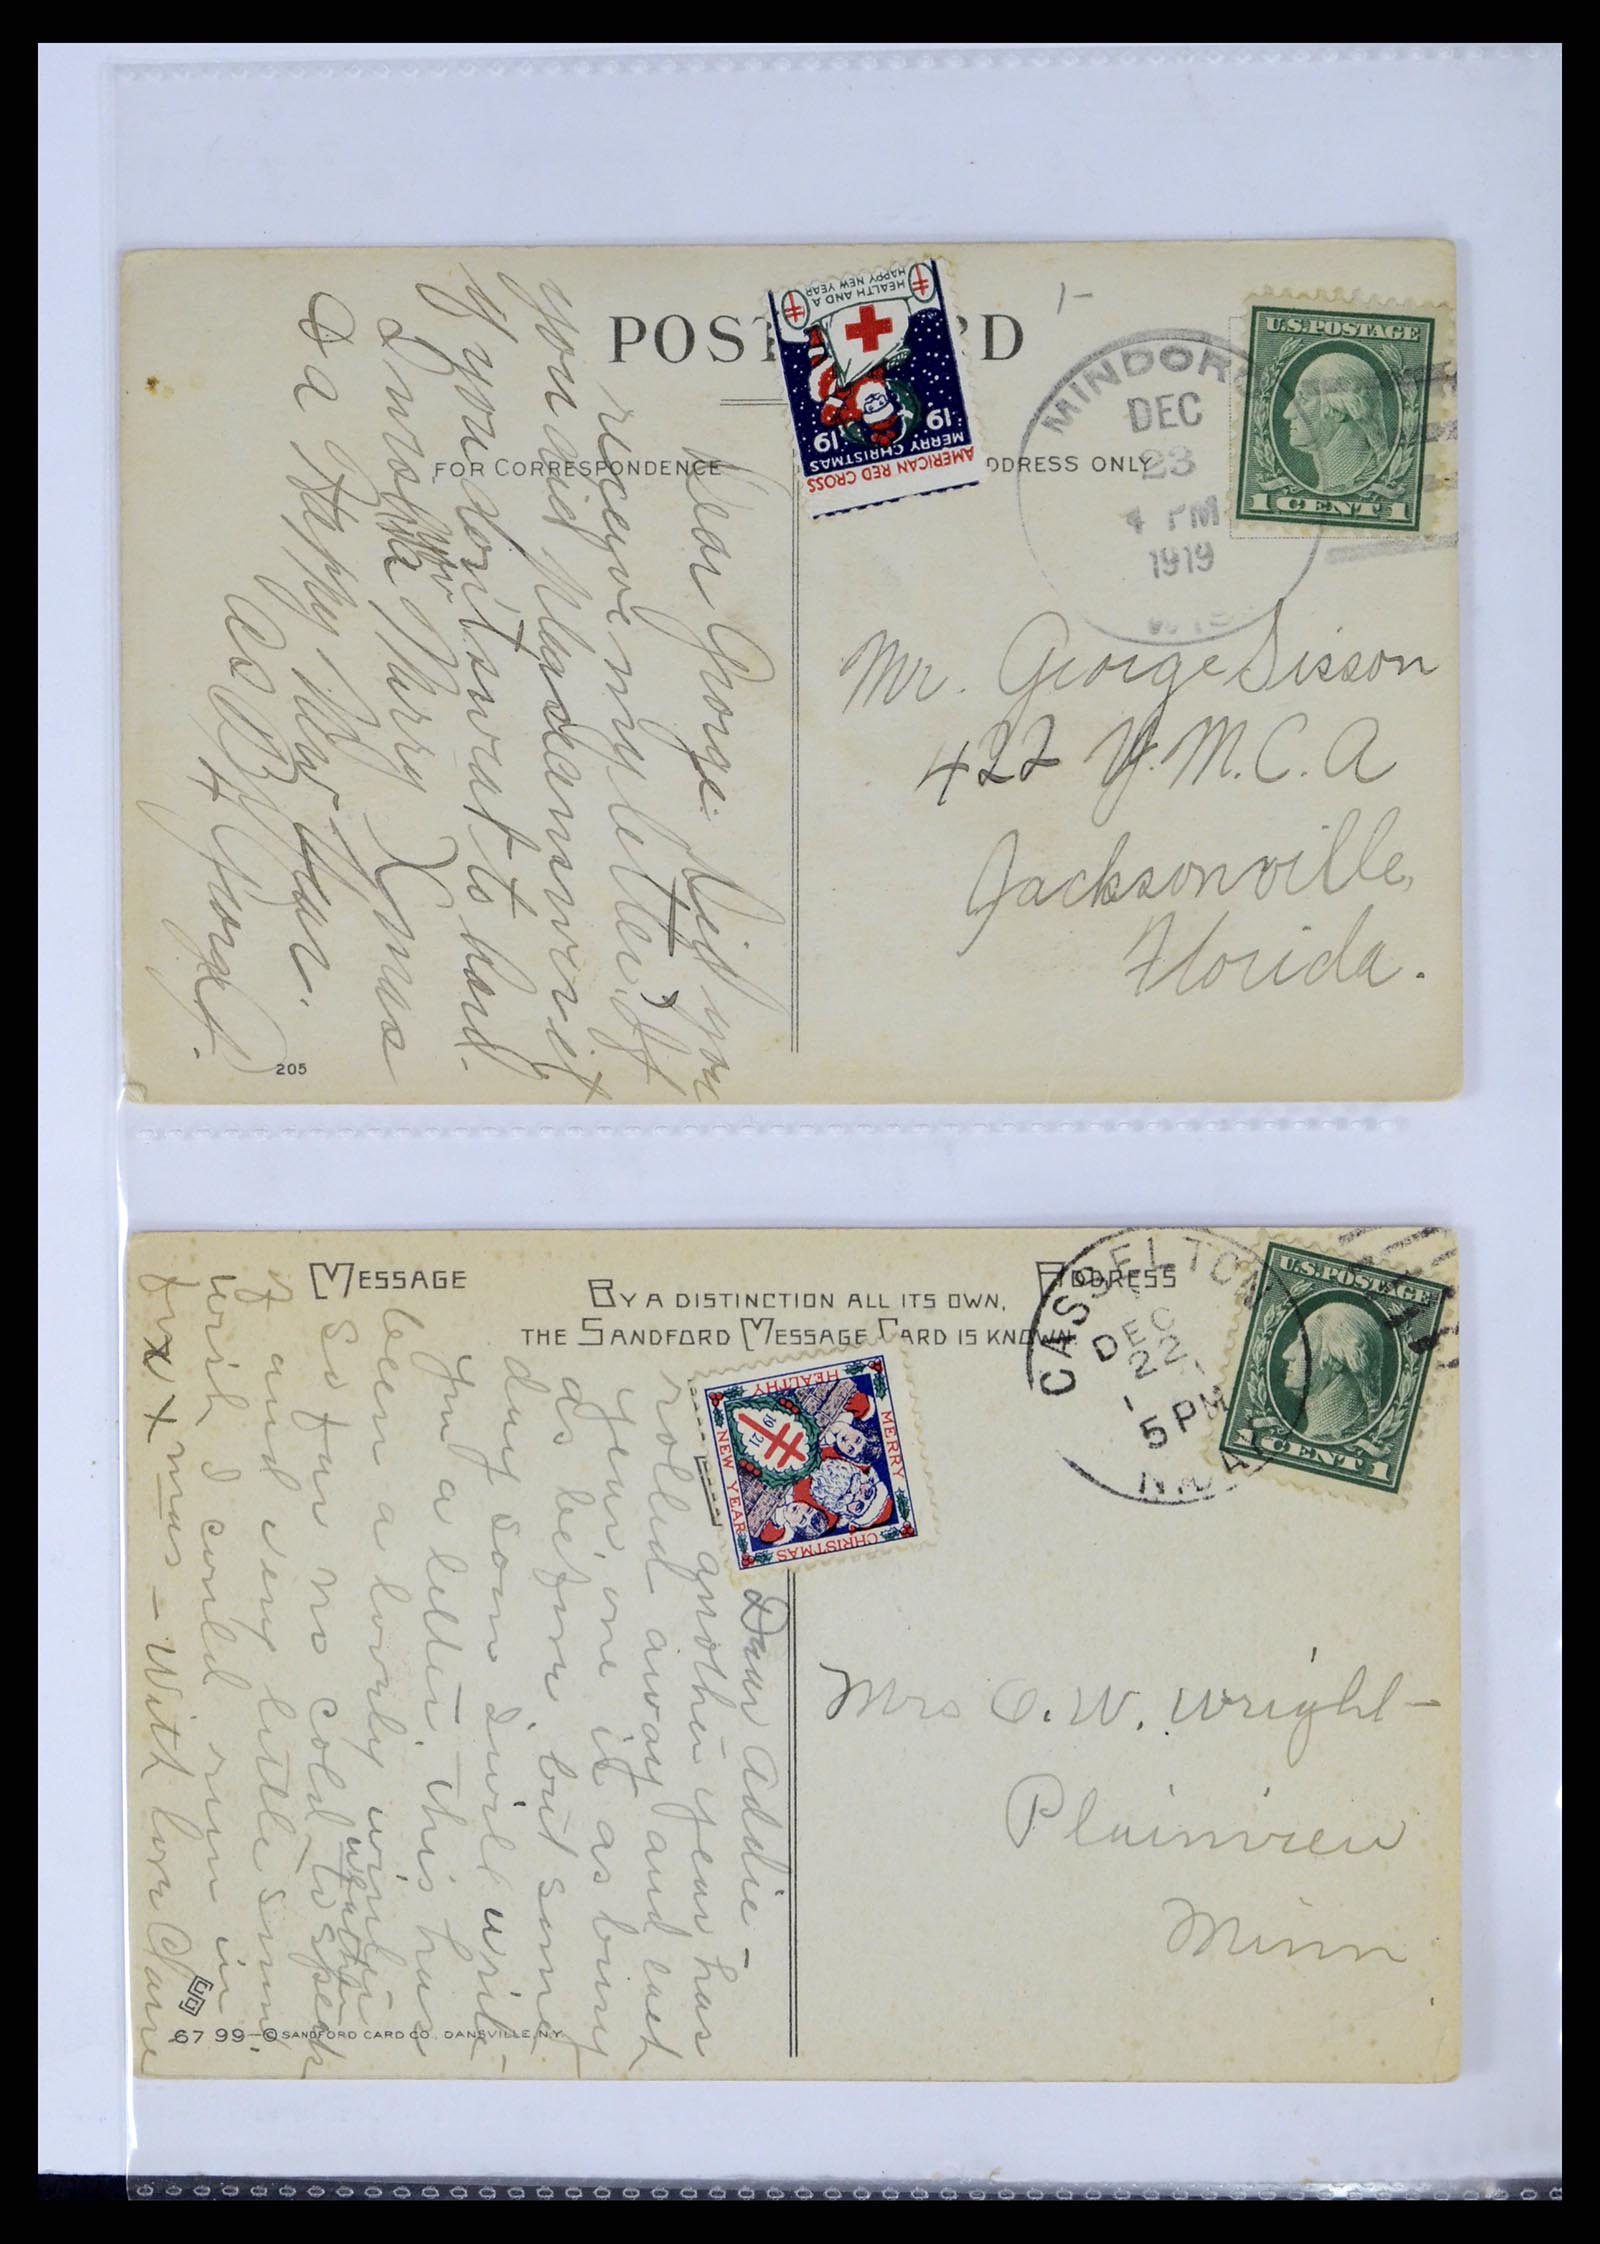 37668 100 - Stamp collection 37668 USA Christmas seals on cover 1908-2009.